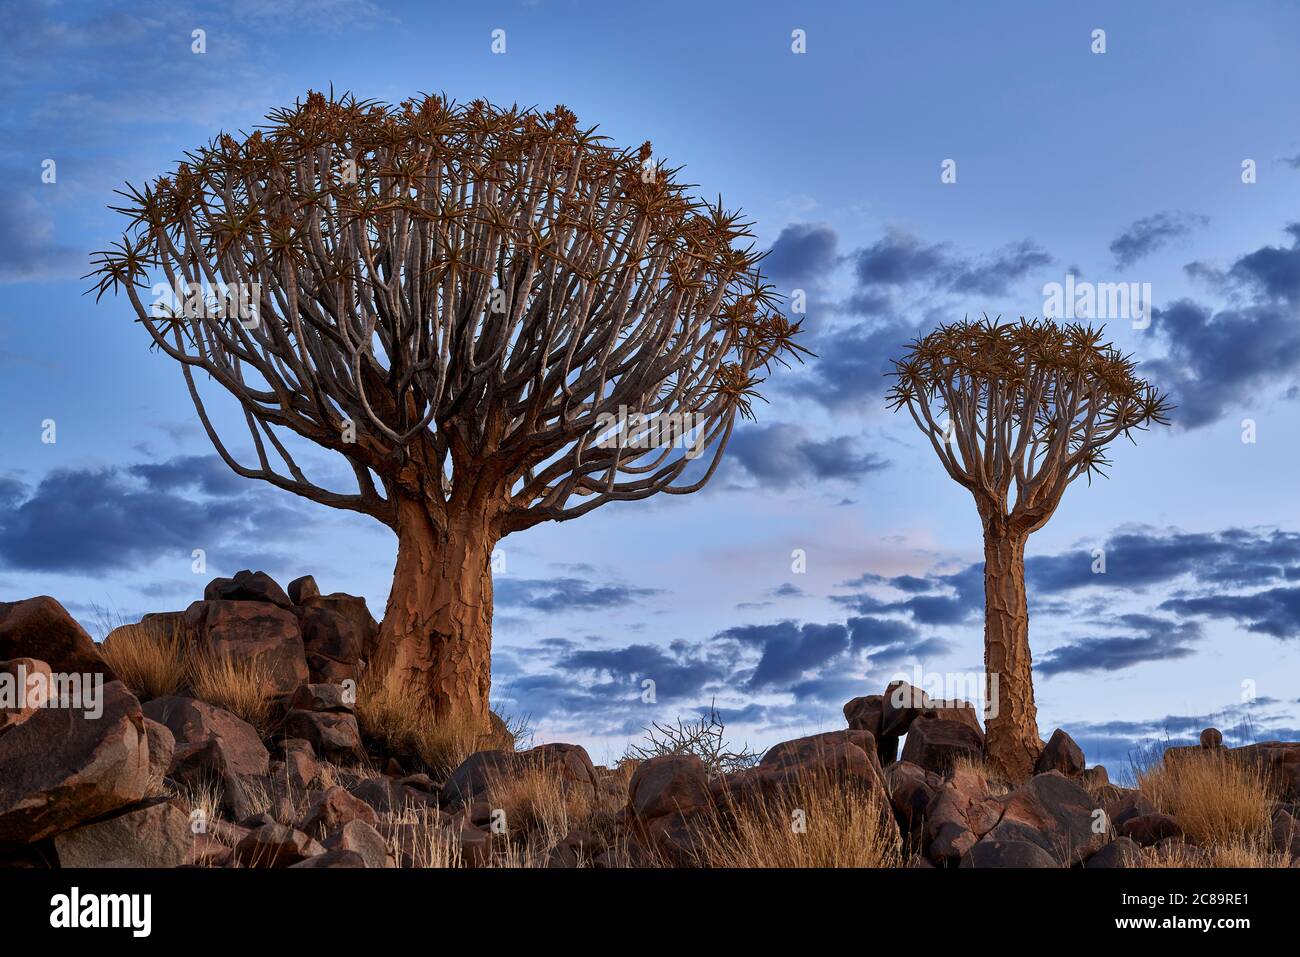 Sun impostata a Quiver tree forest, Aloe dichotoma, Azienda Agricola Garas, Mesosaurus Sito fossile, Keetmanshoop, Namibia, Africa Foto Stock